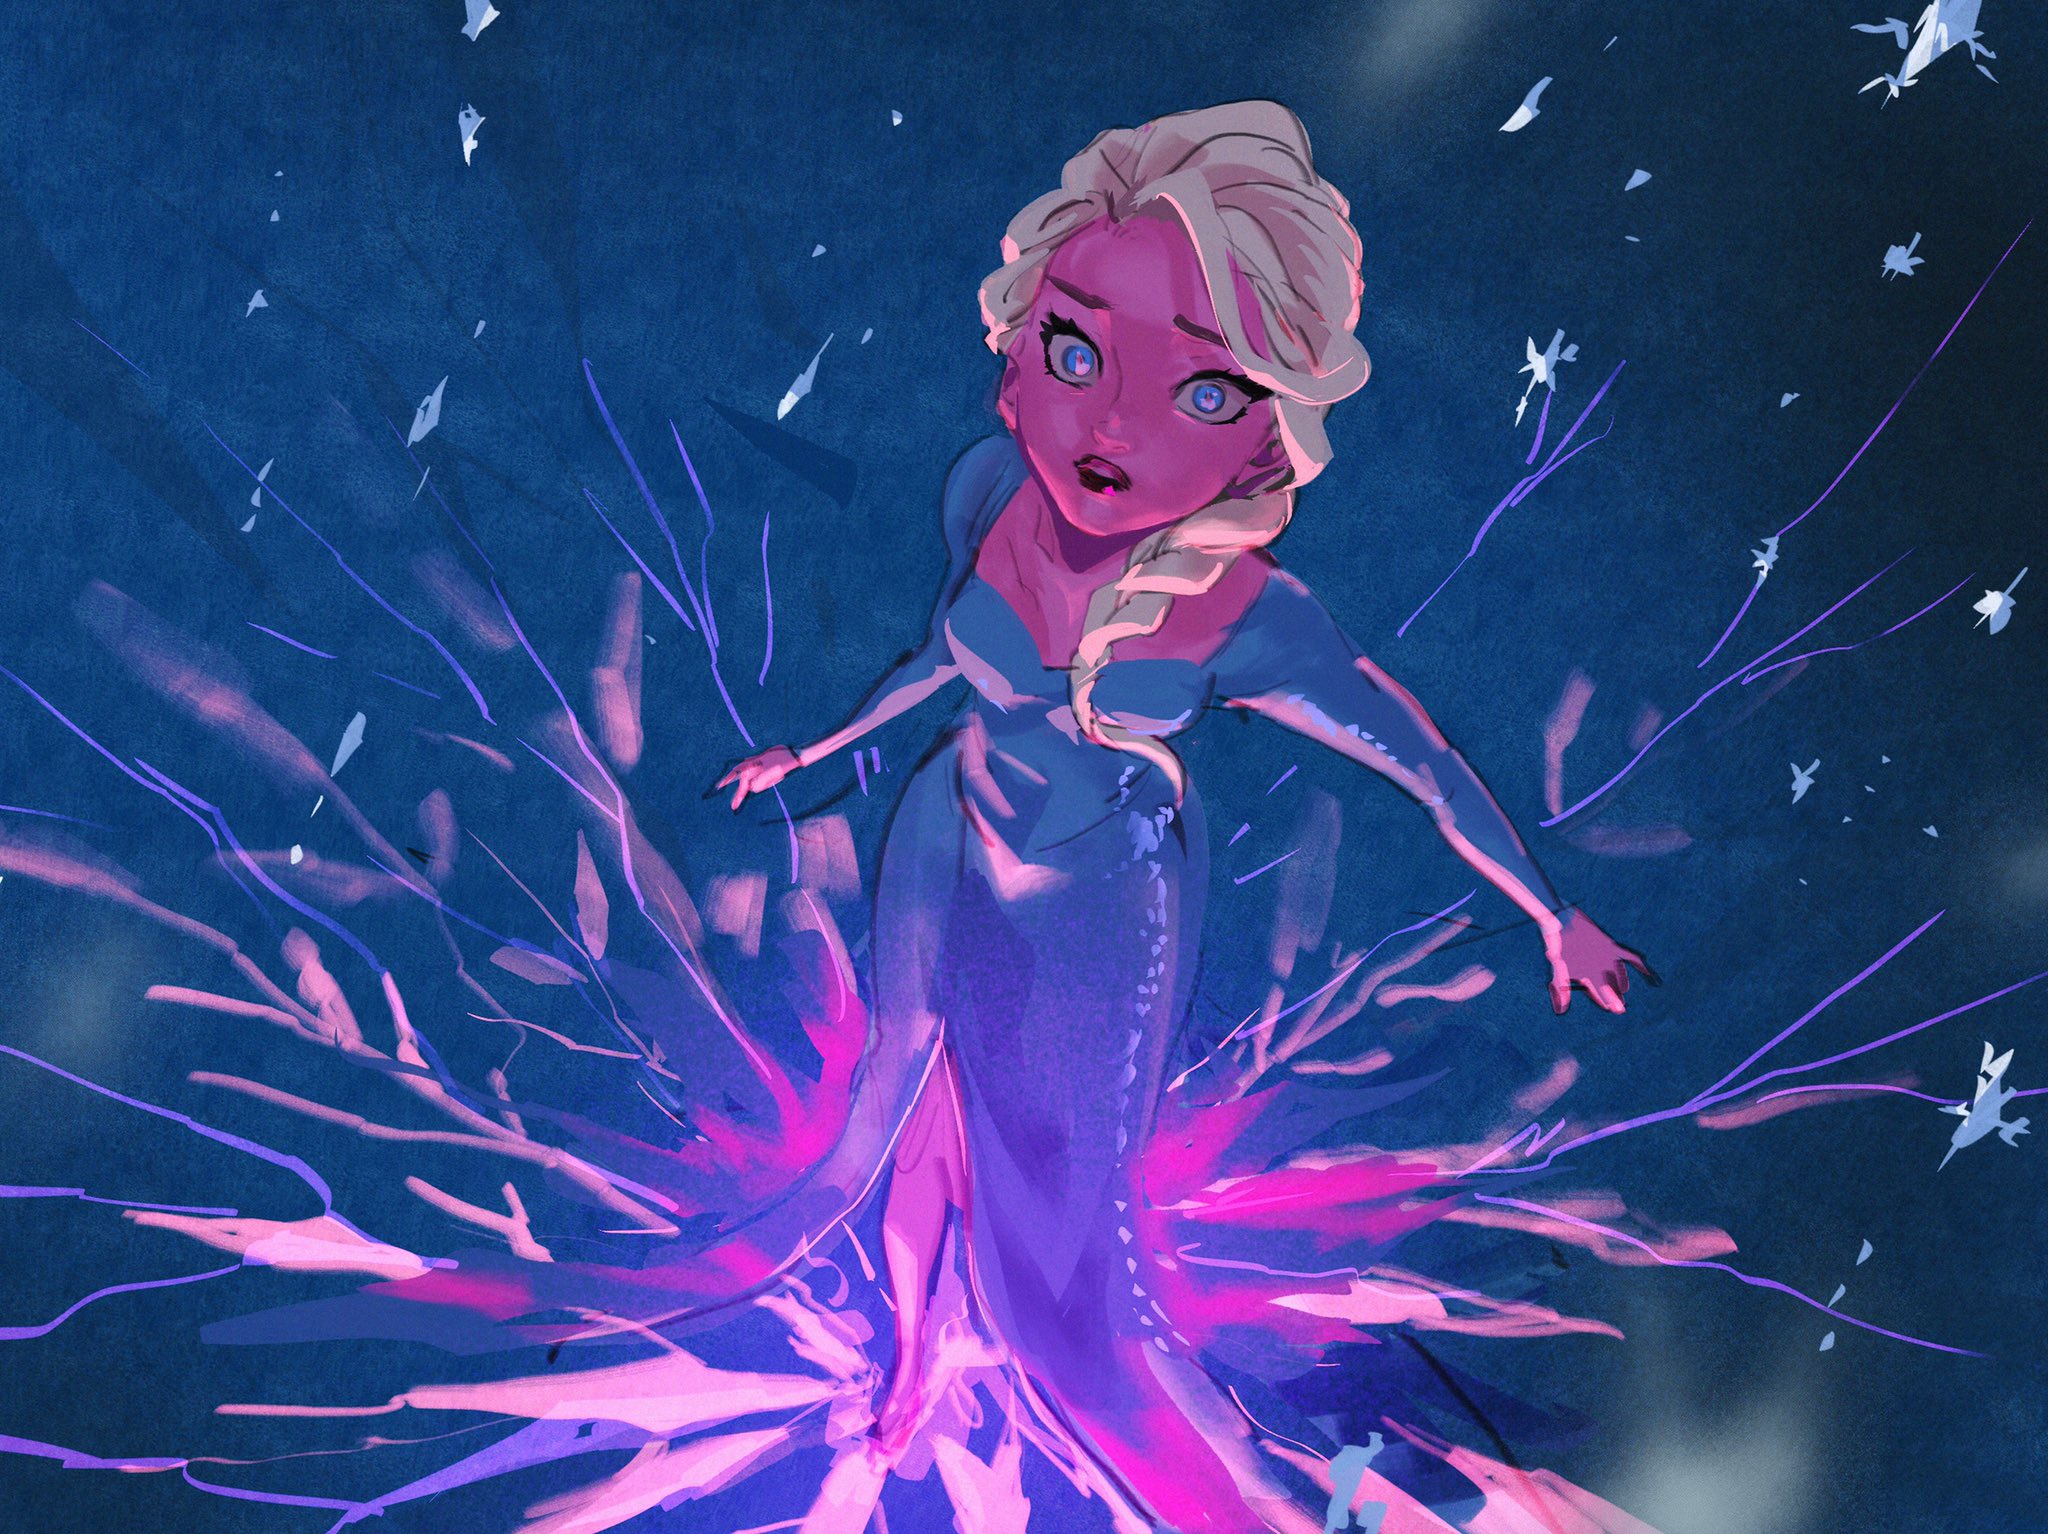 Elsa the Snow Queen by Gori Matsu